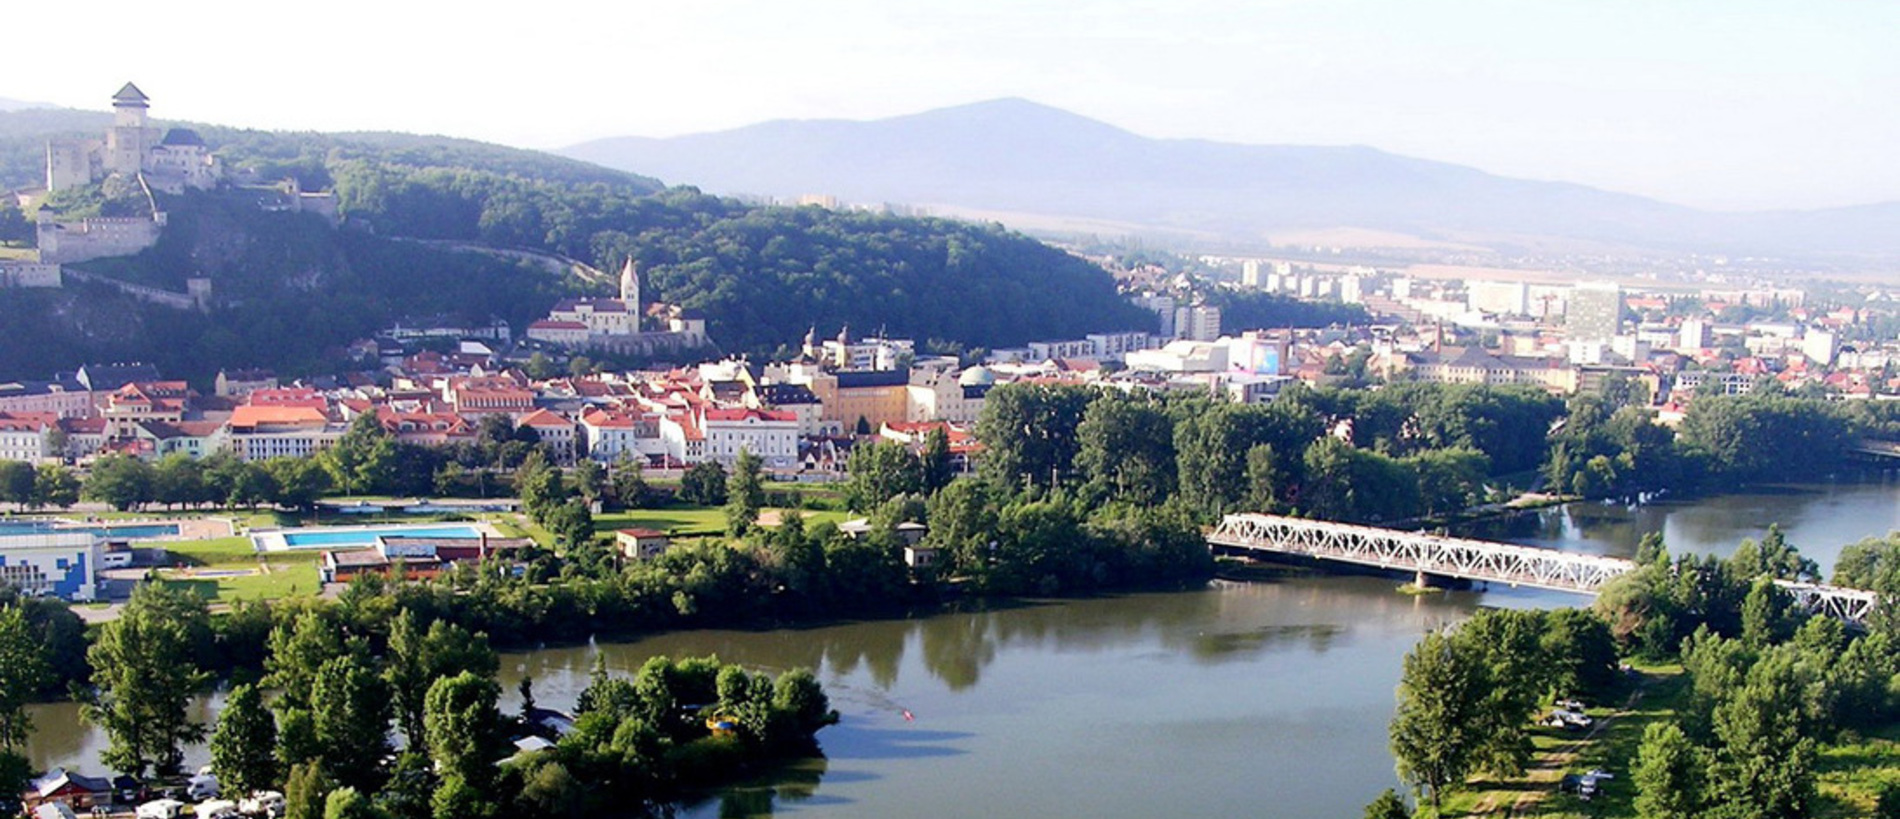 Trenčín - City on the River